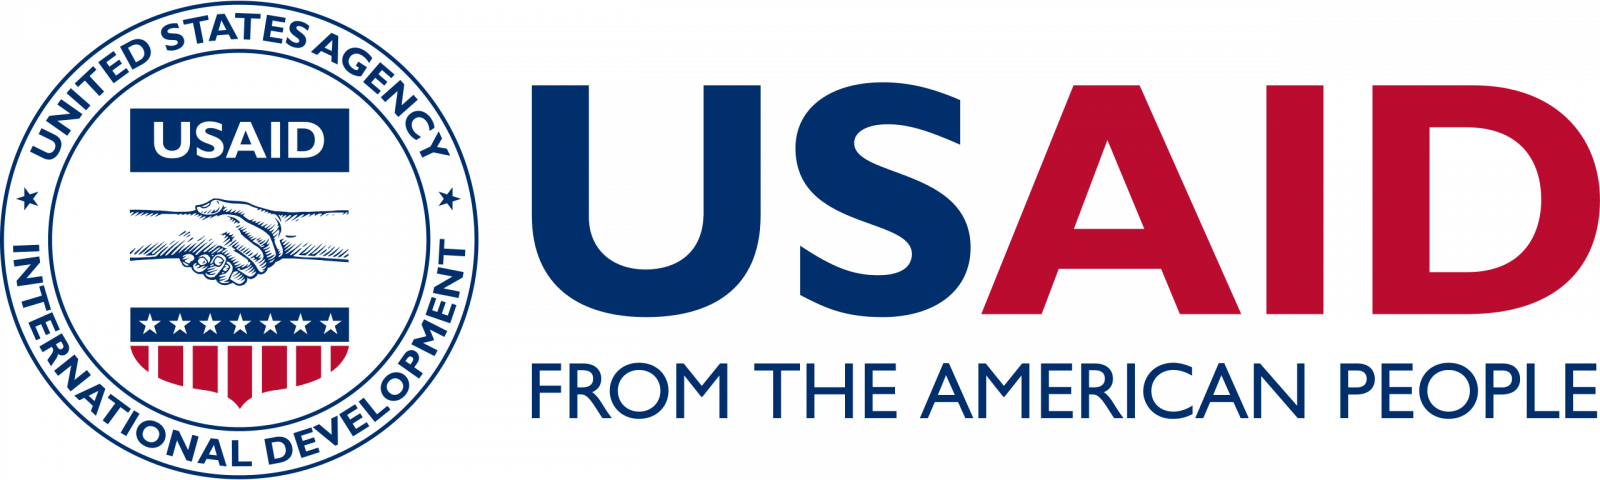 US aid logo